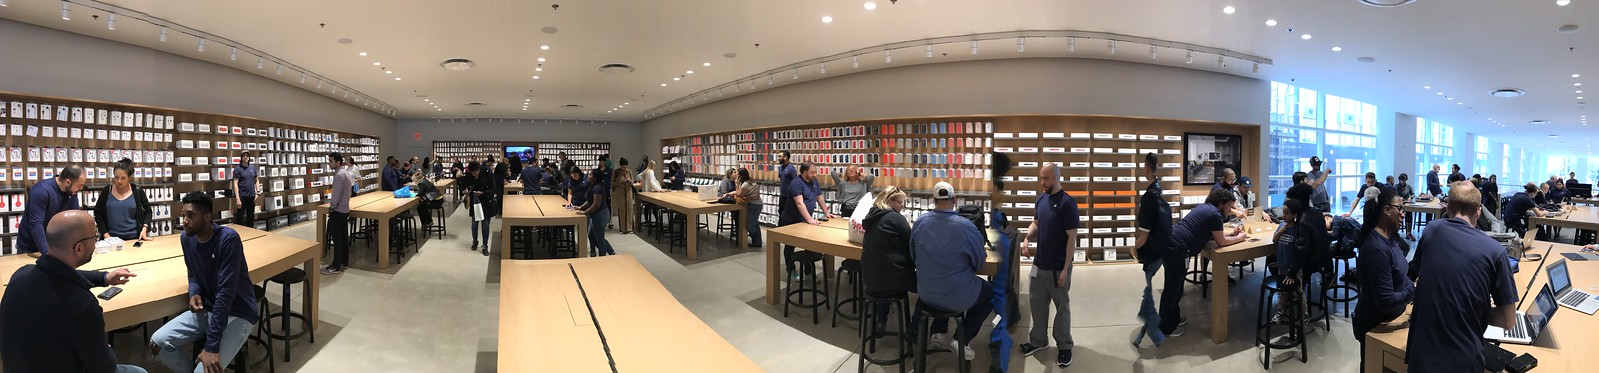 Apple Store 5th Avenue - Temporary Location -